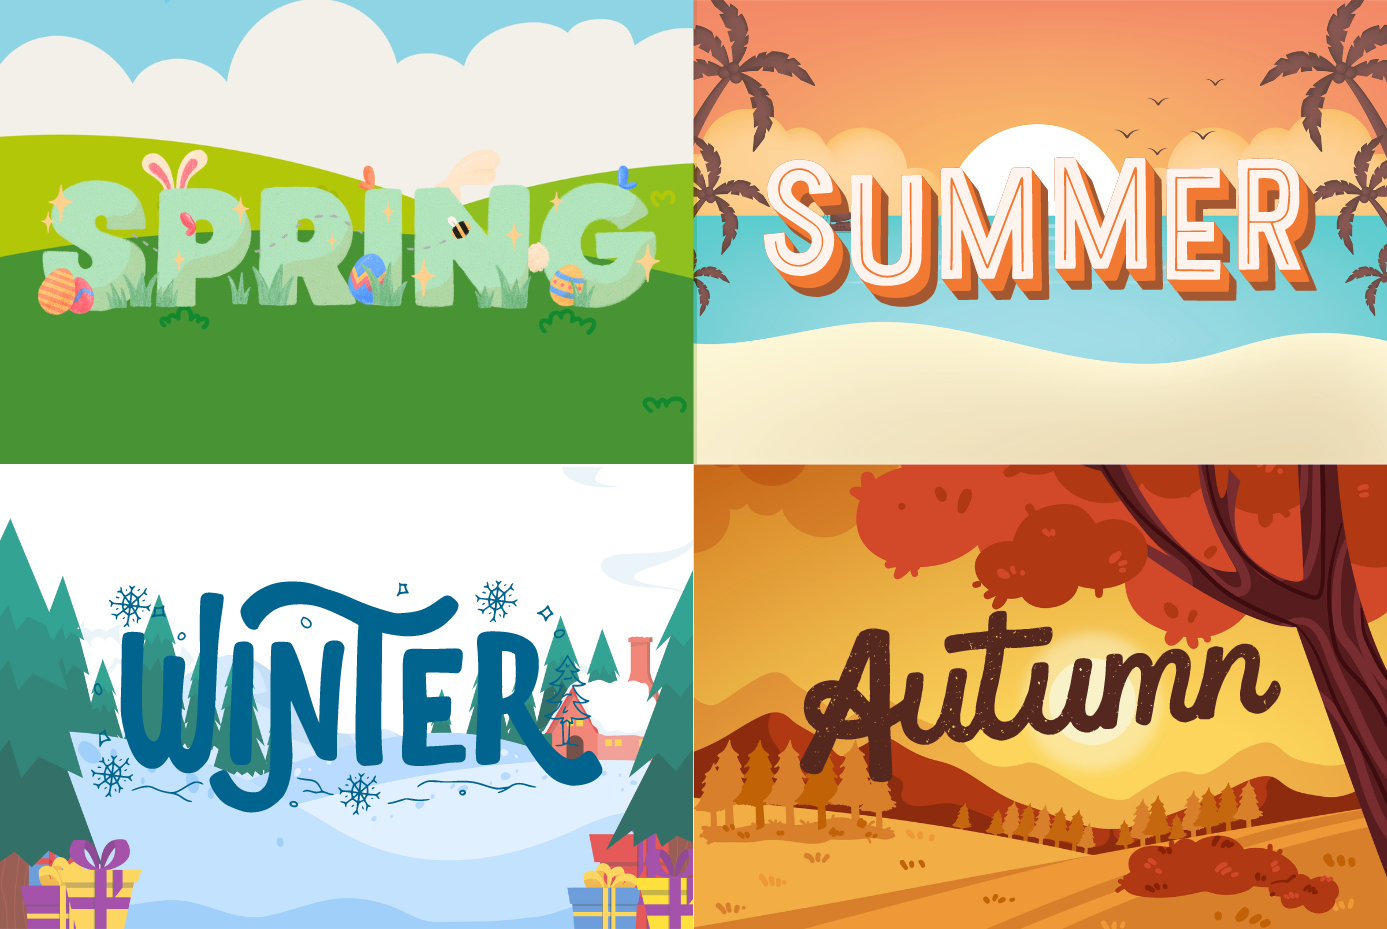 The four seasons: spring, summer, autumn, winter.